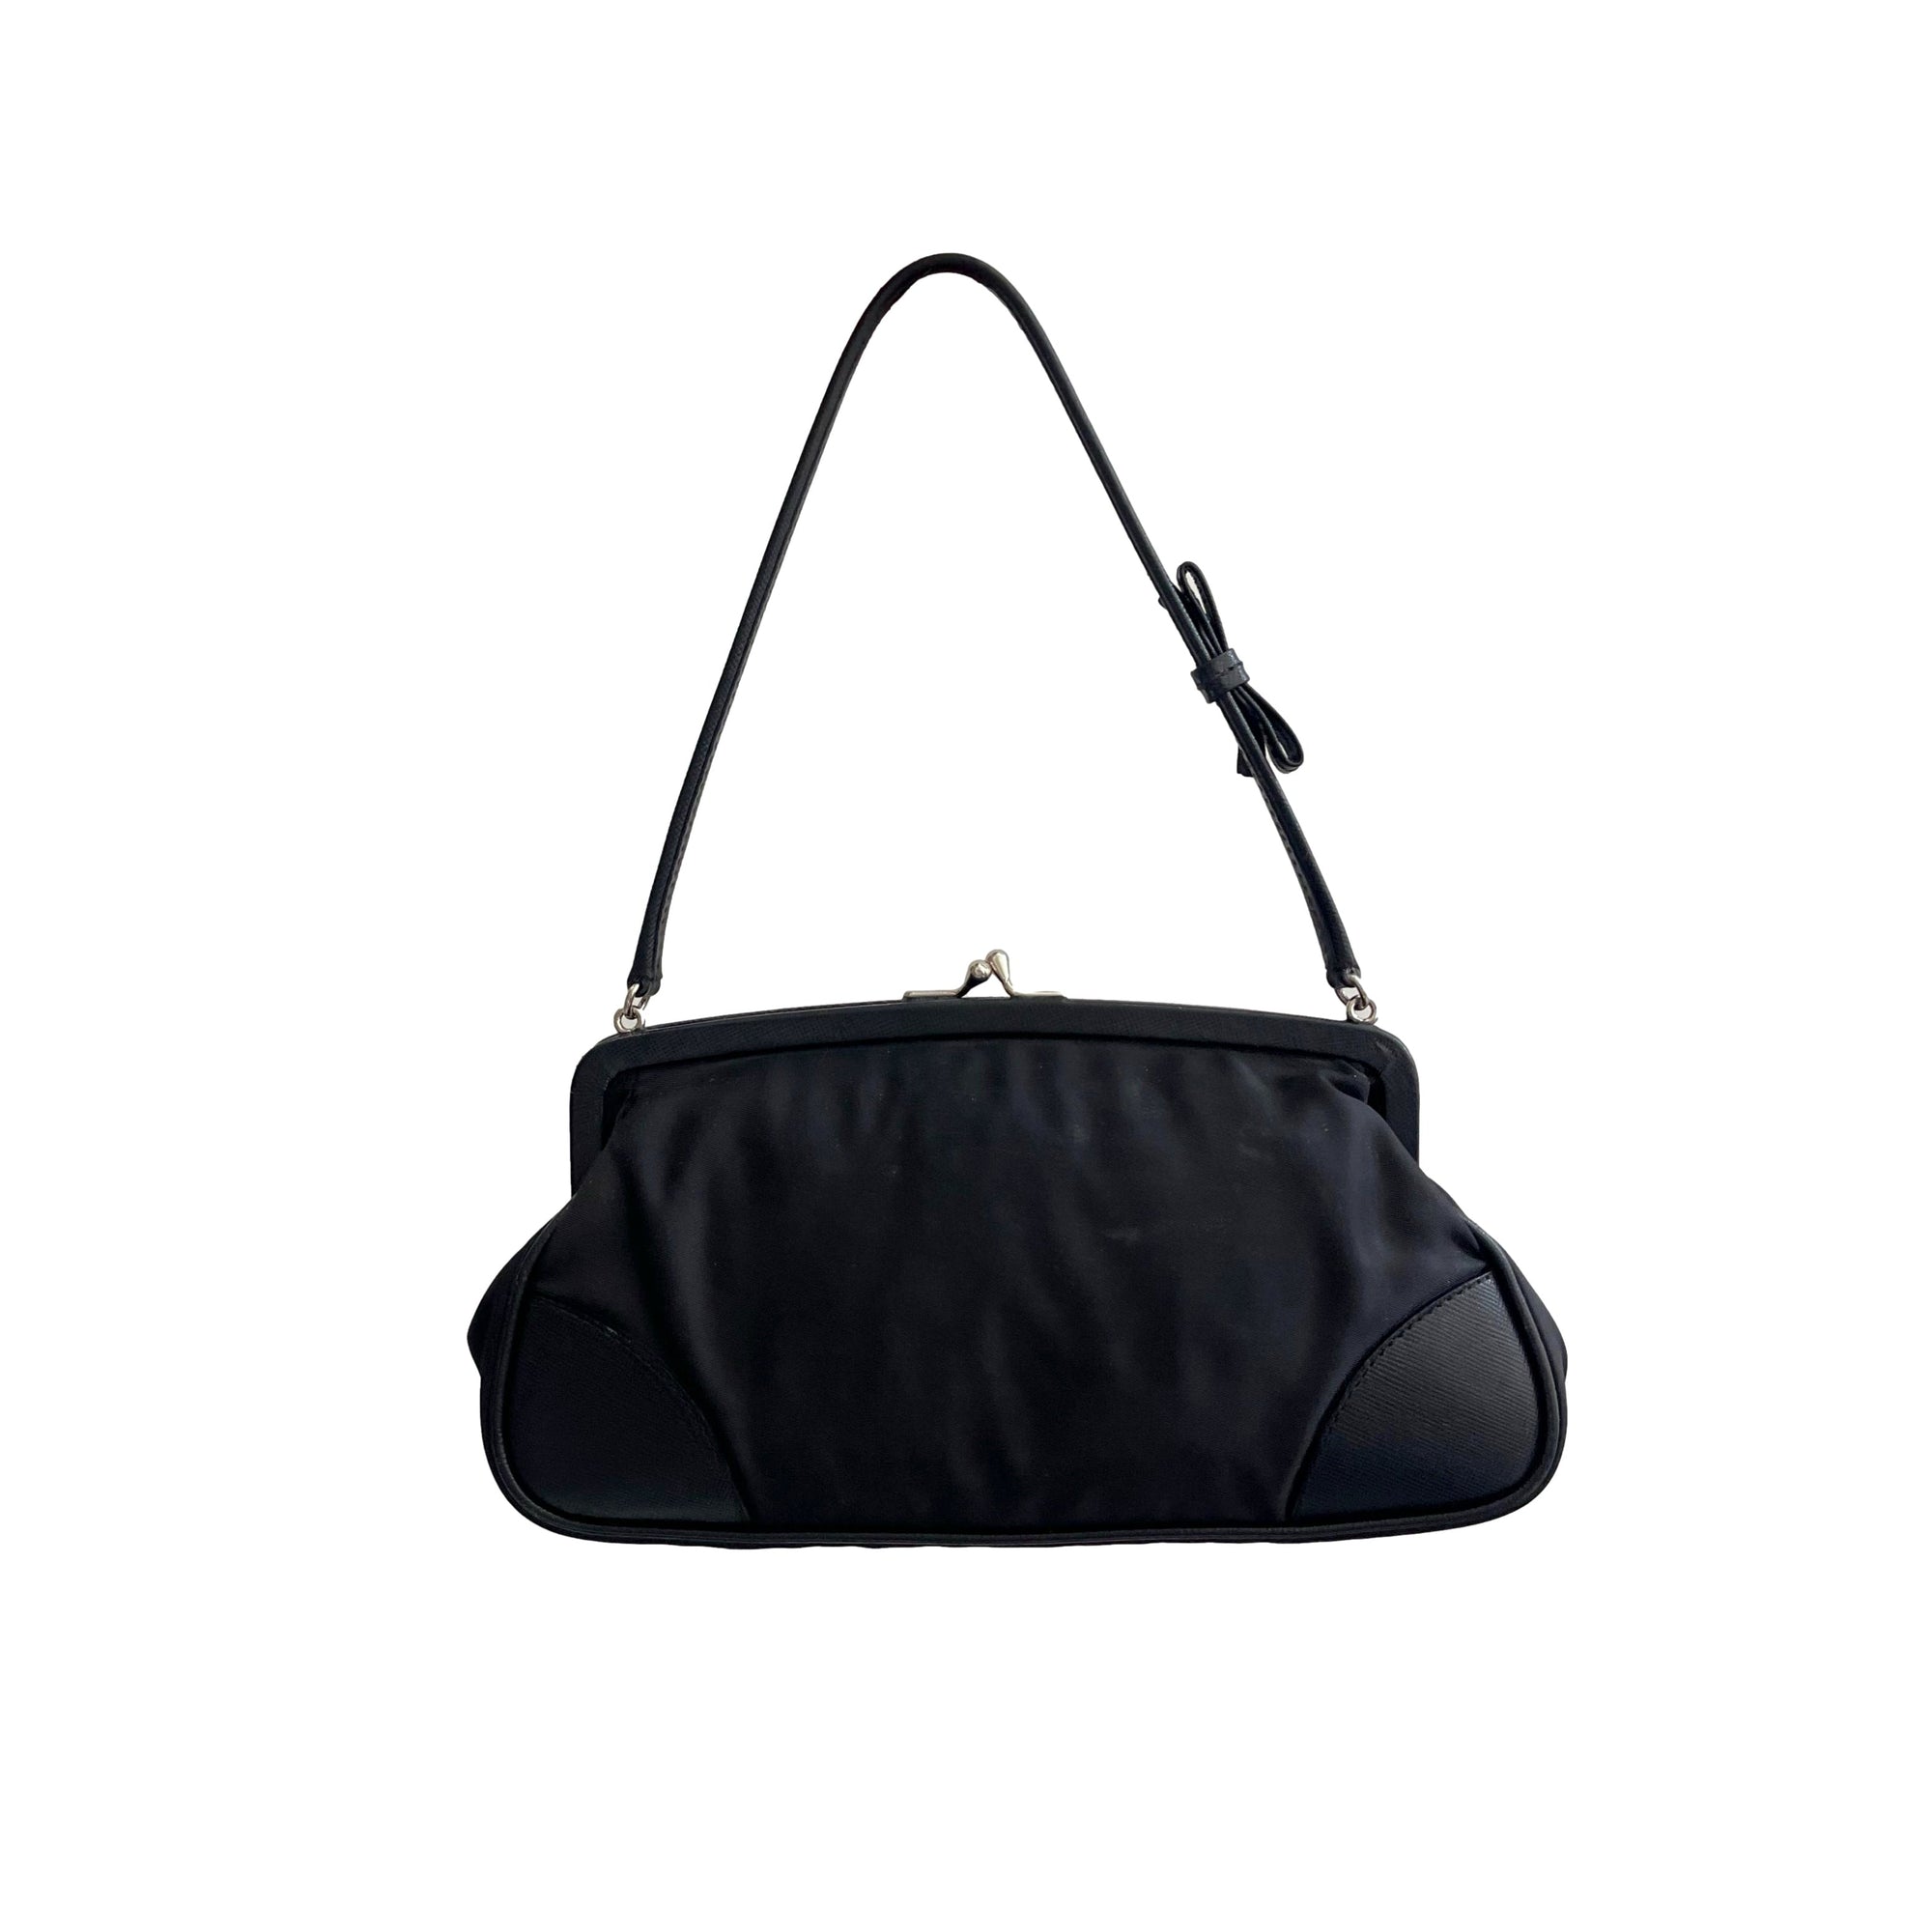 Prada Black Nylon Kiss Lock Shoulder Bag - Handbags